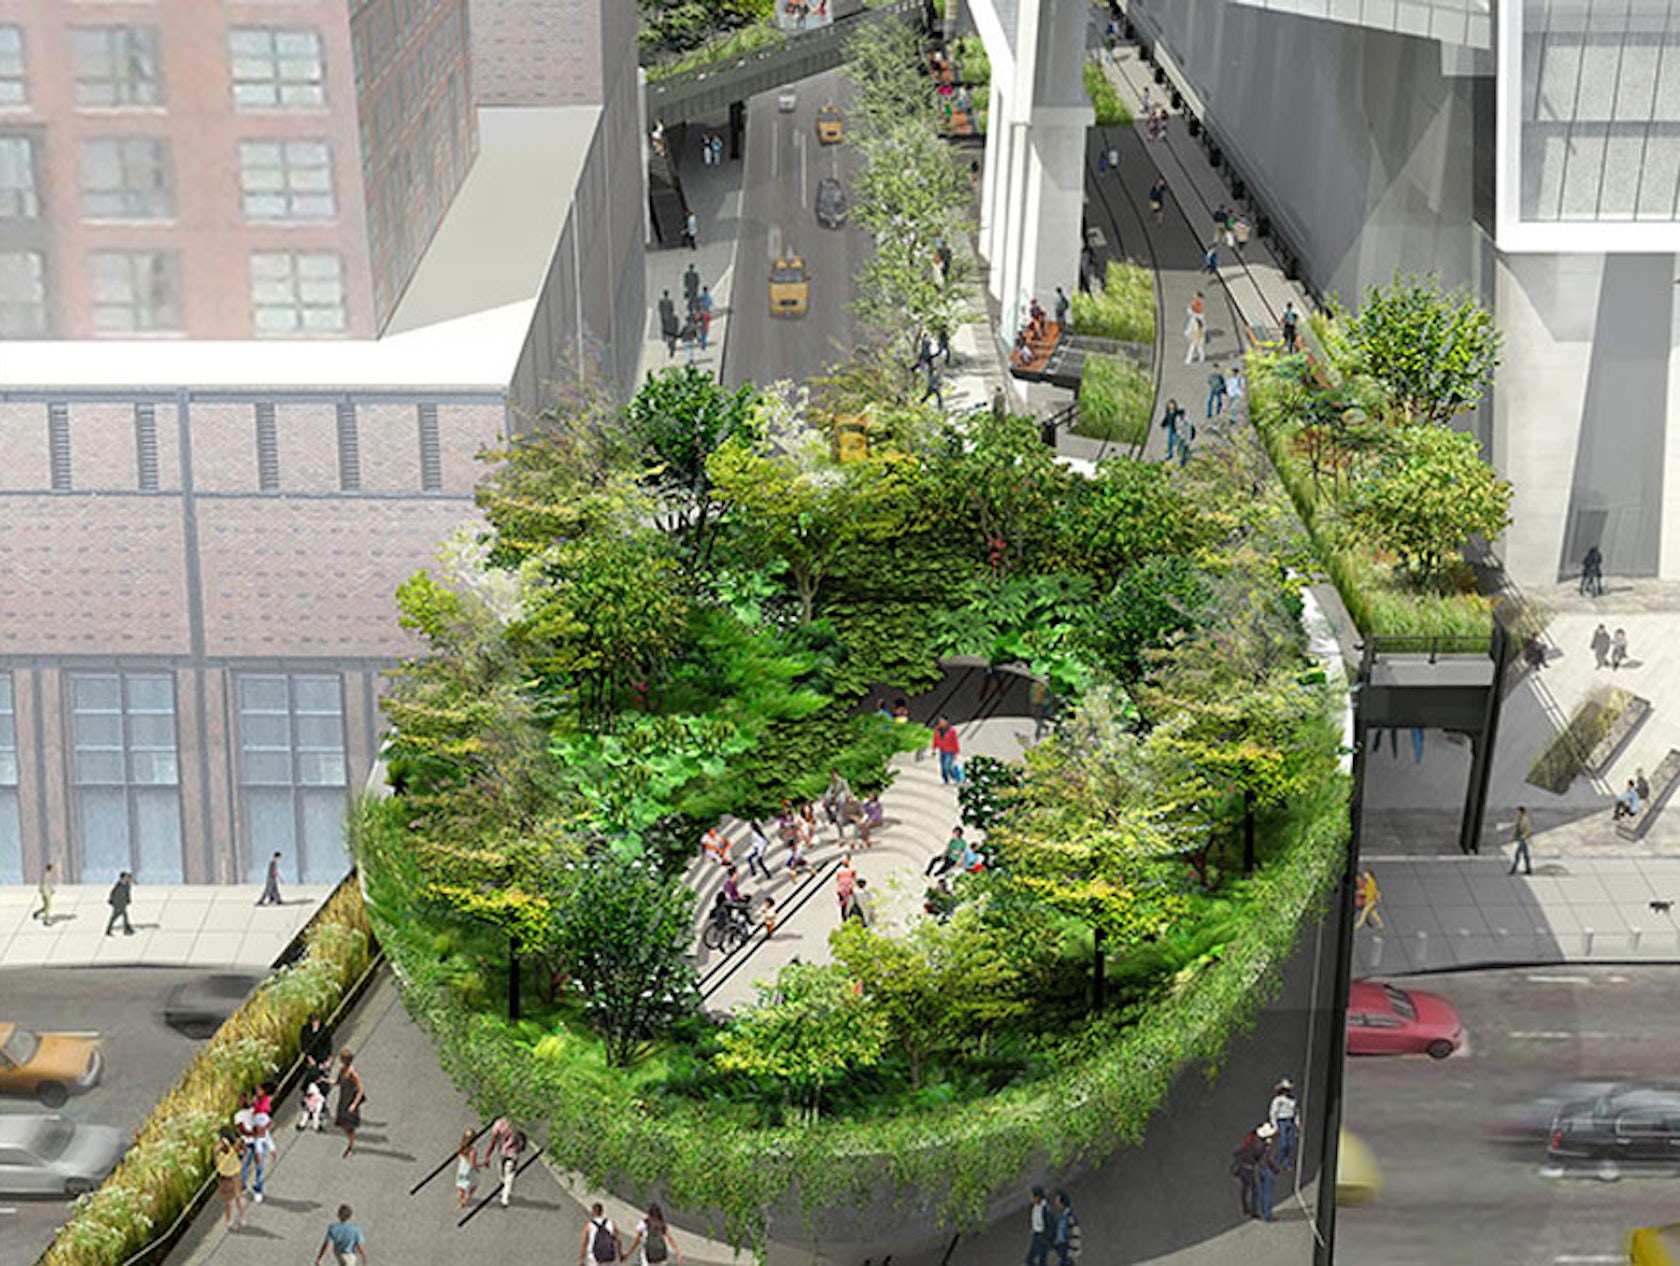 New York's High Line garden is a masterclass in urban regeneration